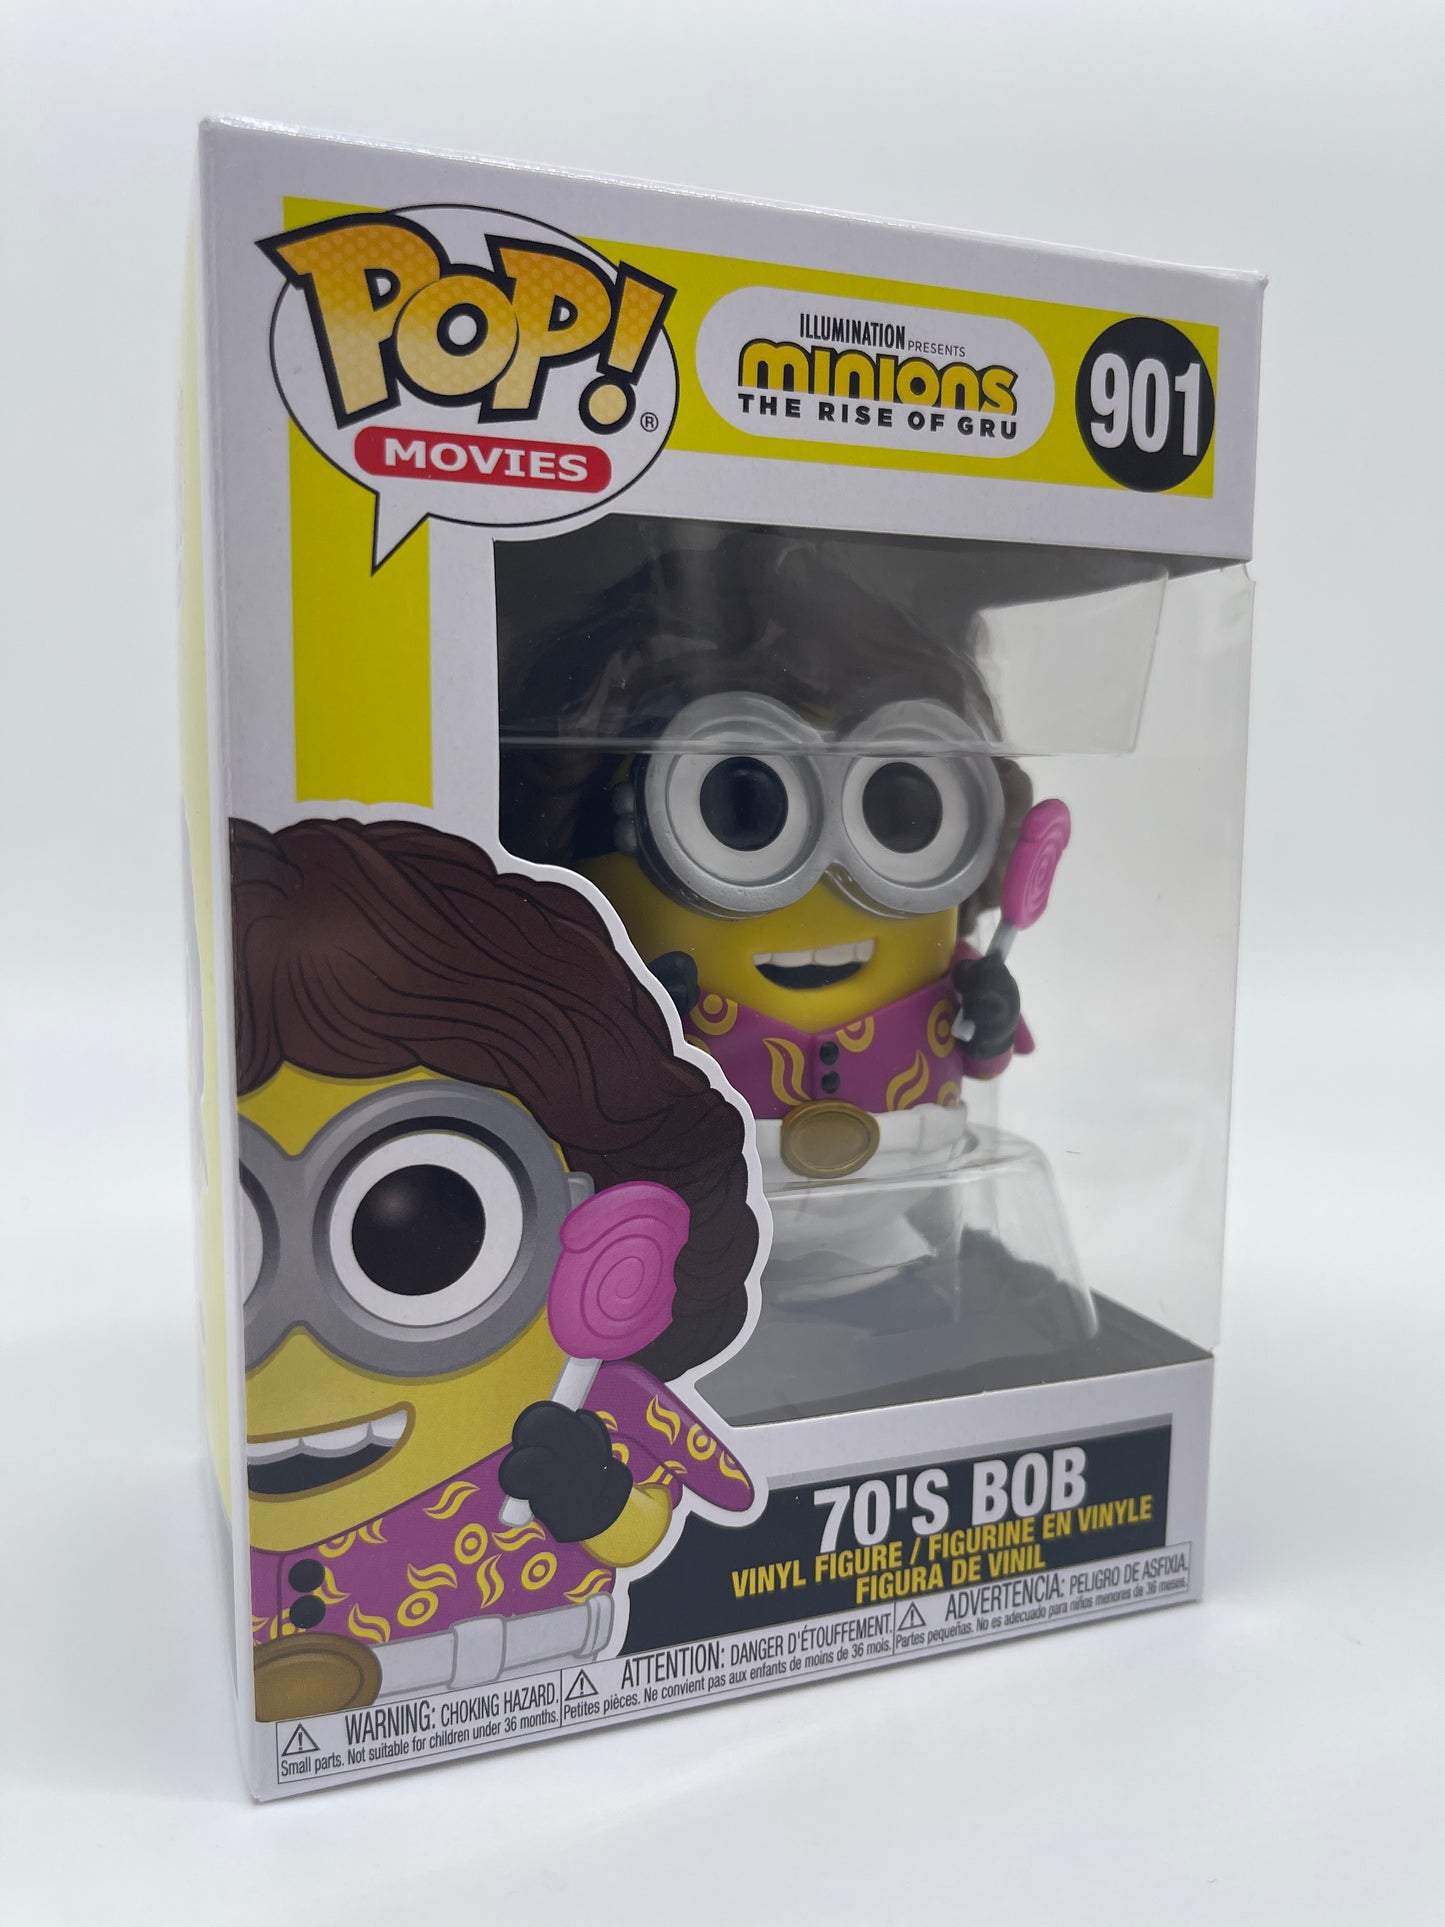 Funko Pop! Movies "70's Bob" #901 Minions Rise of Gru Universal Studios